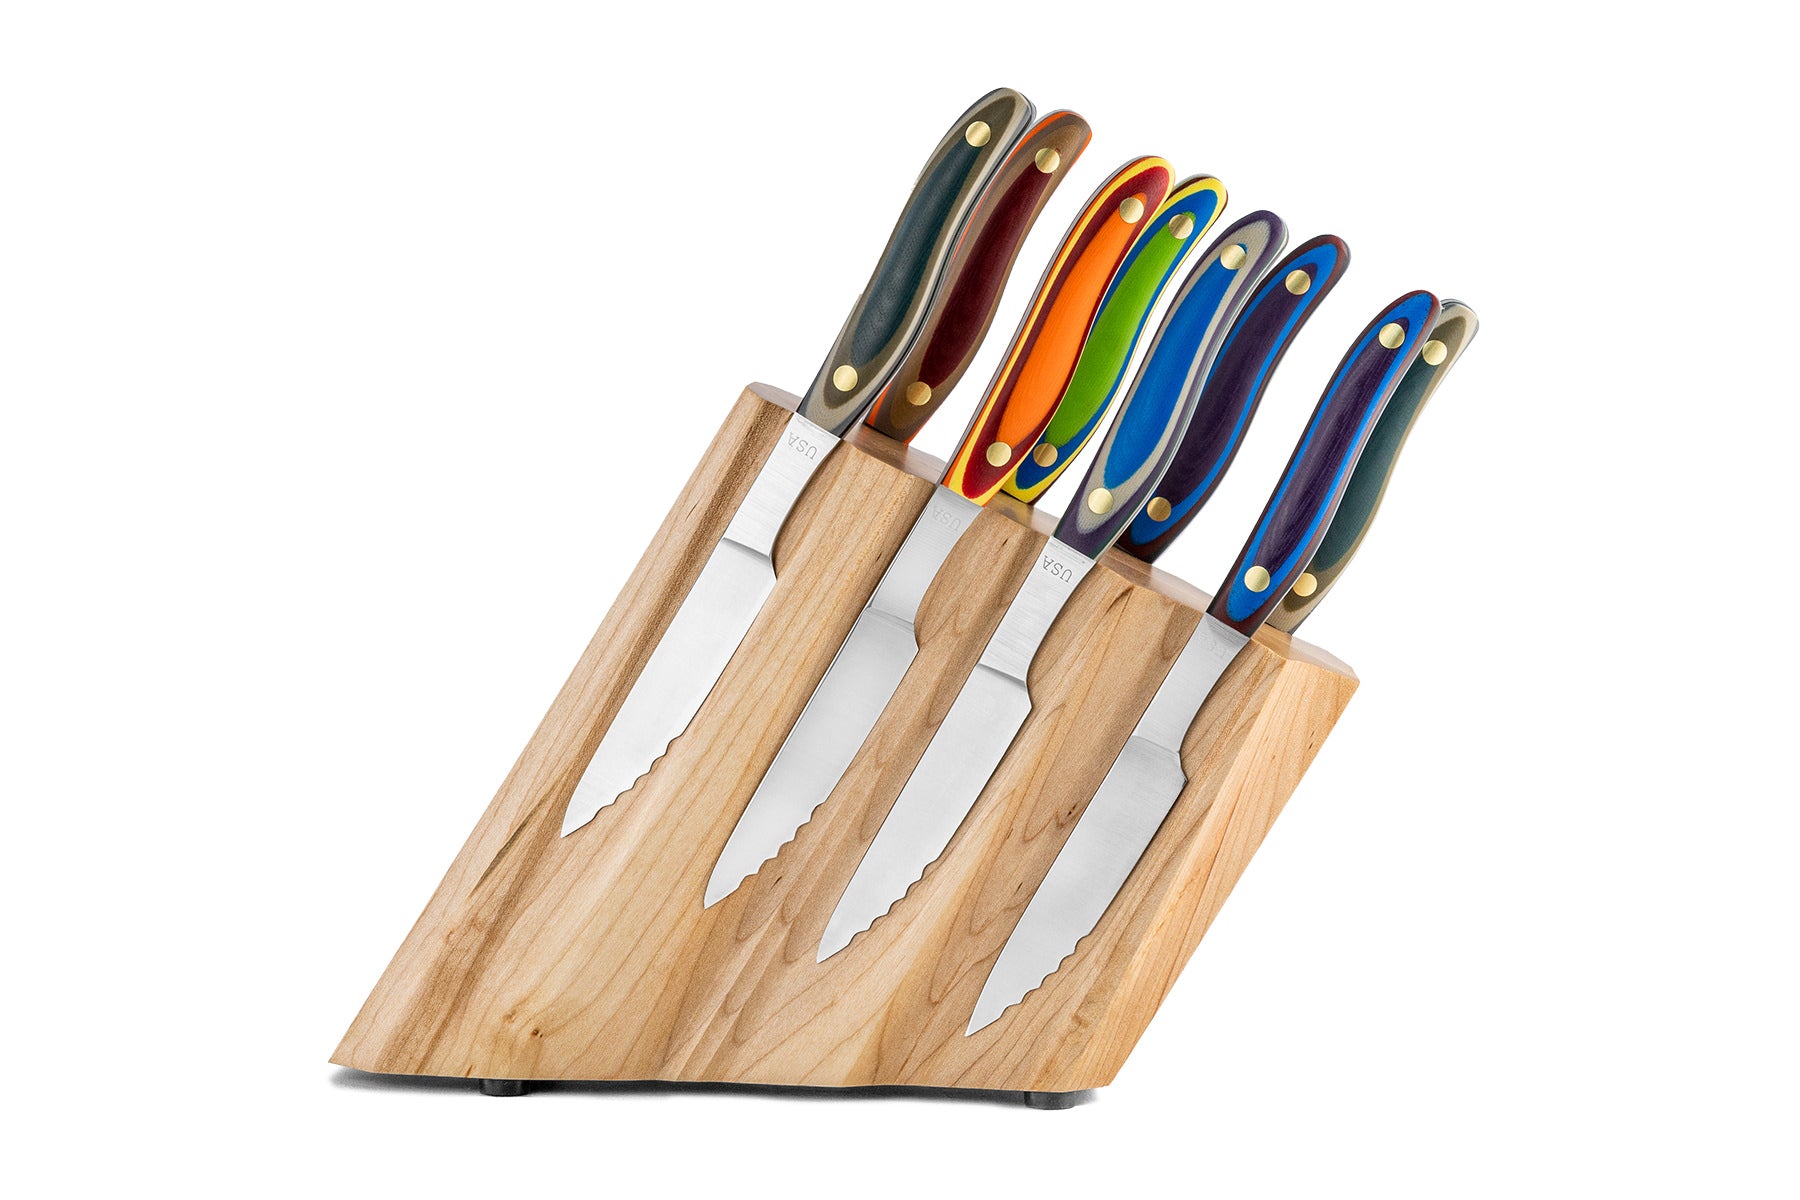  Vvwgkpk 12-Piece Kitchen Knife Set with Wooden Block